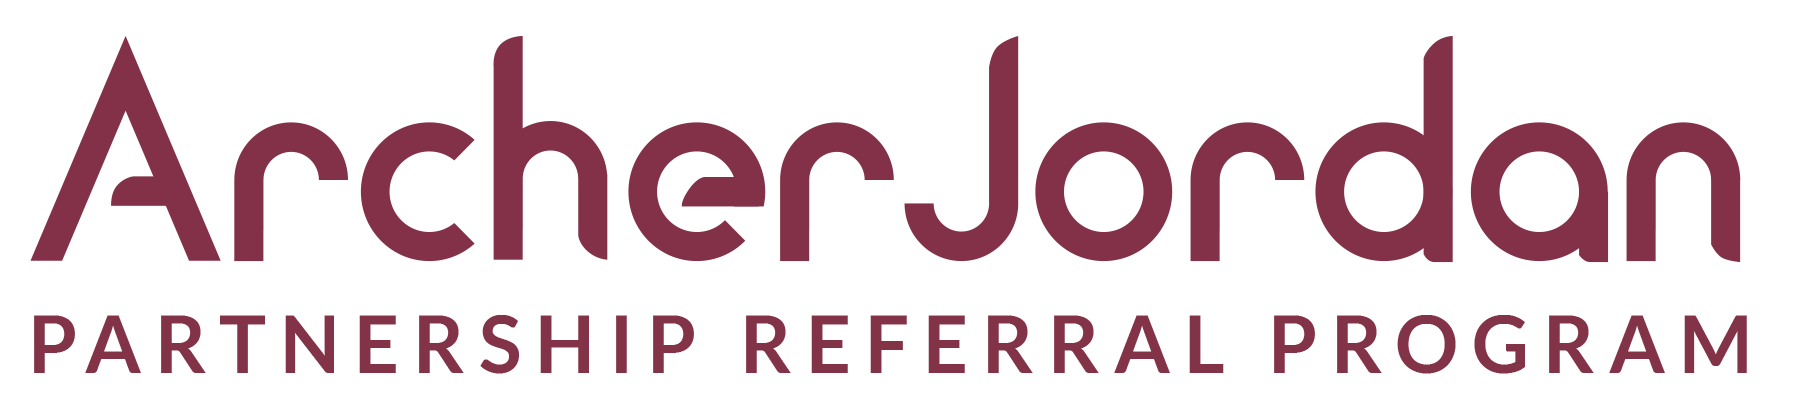 archer jordan referral partners logo